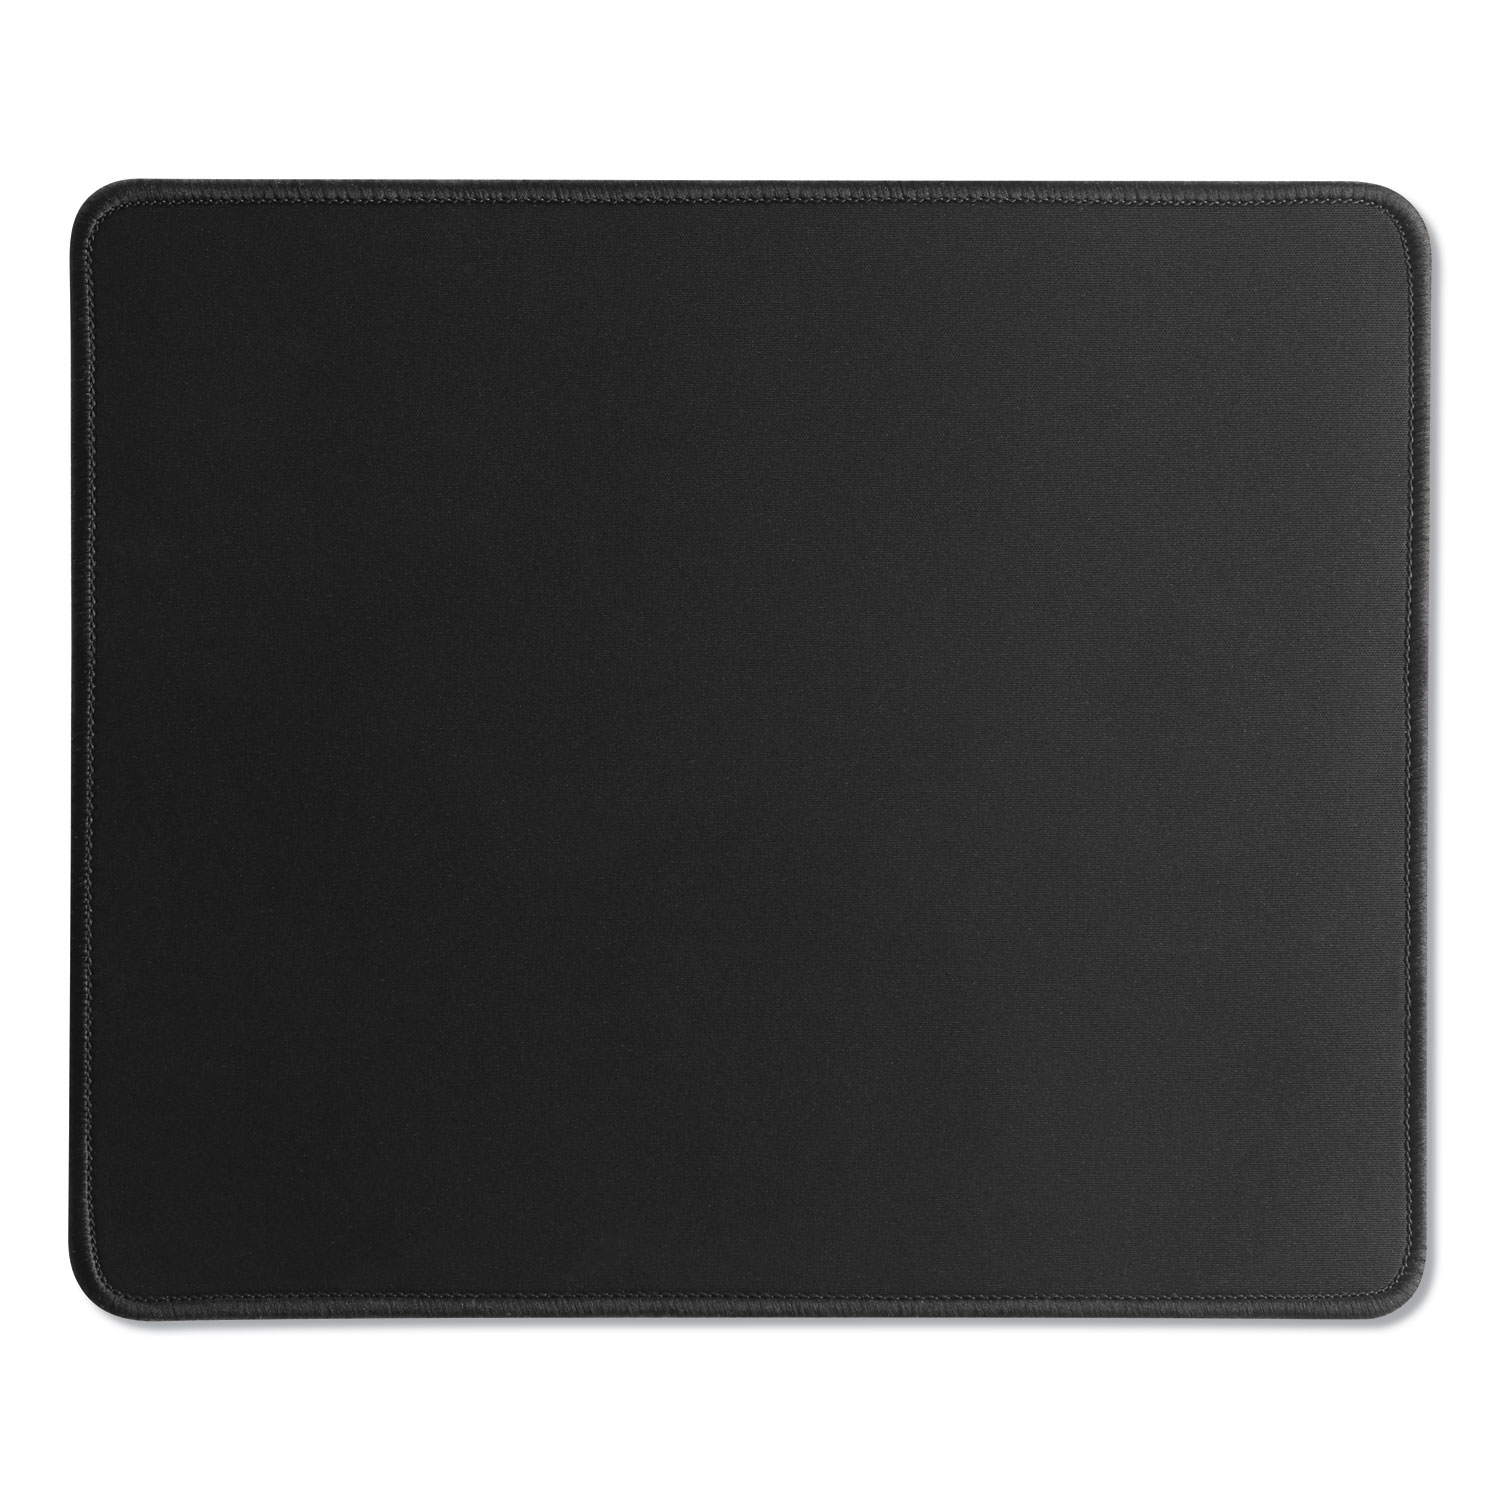 Large Mouse Pad, Nonskid Base, 9 7/8 x 11 7/8 x 1/8, Black